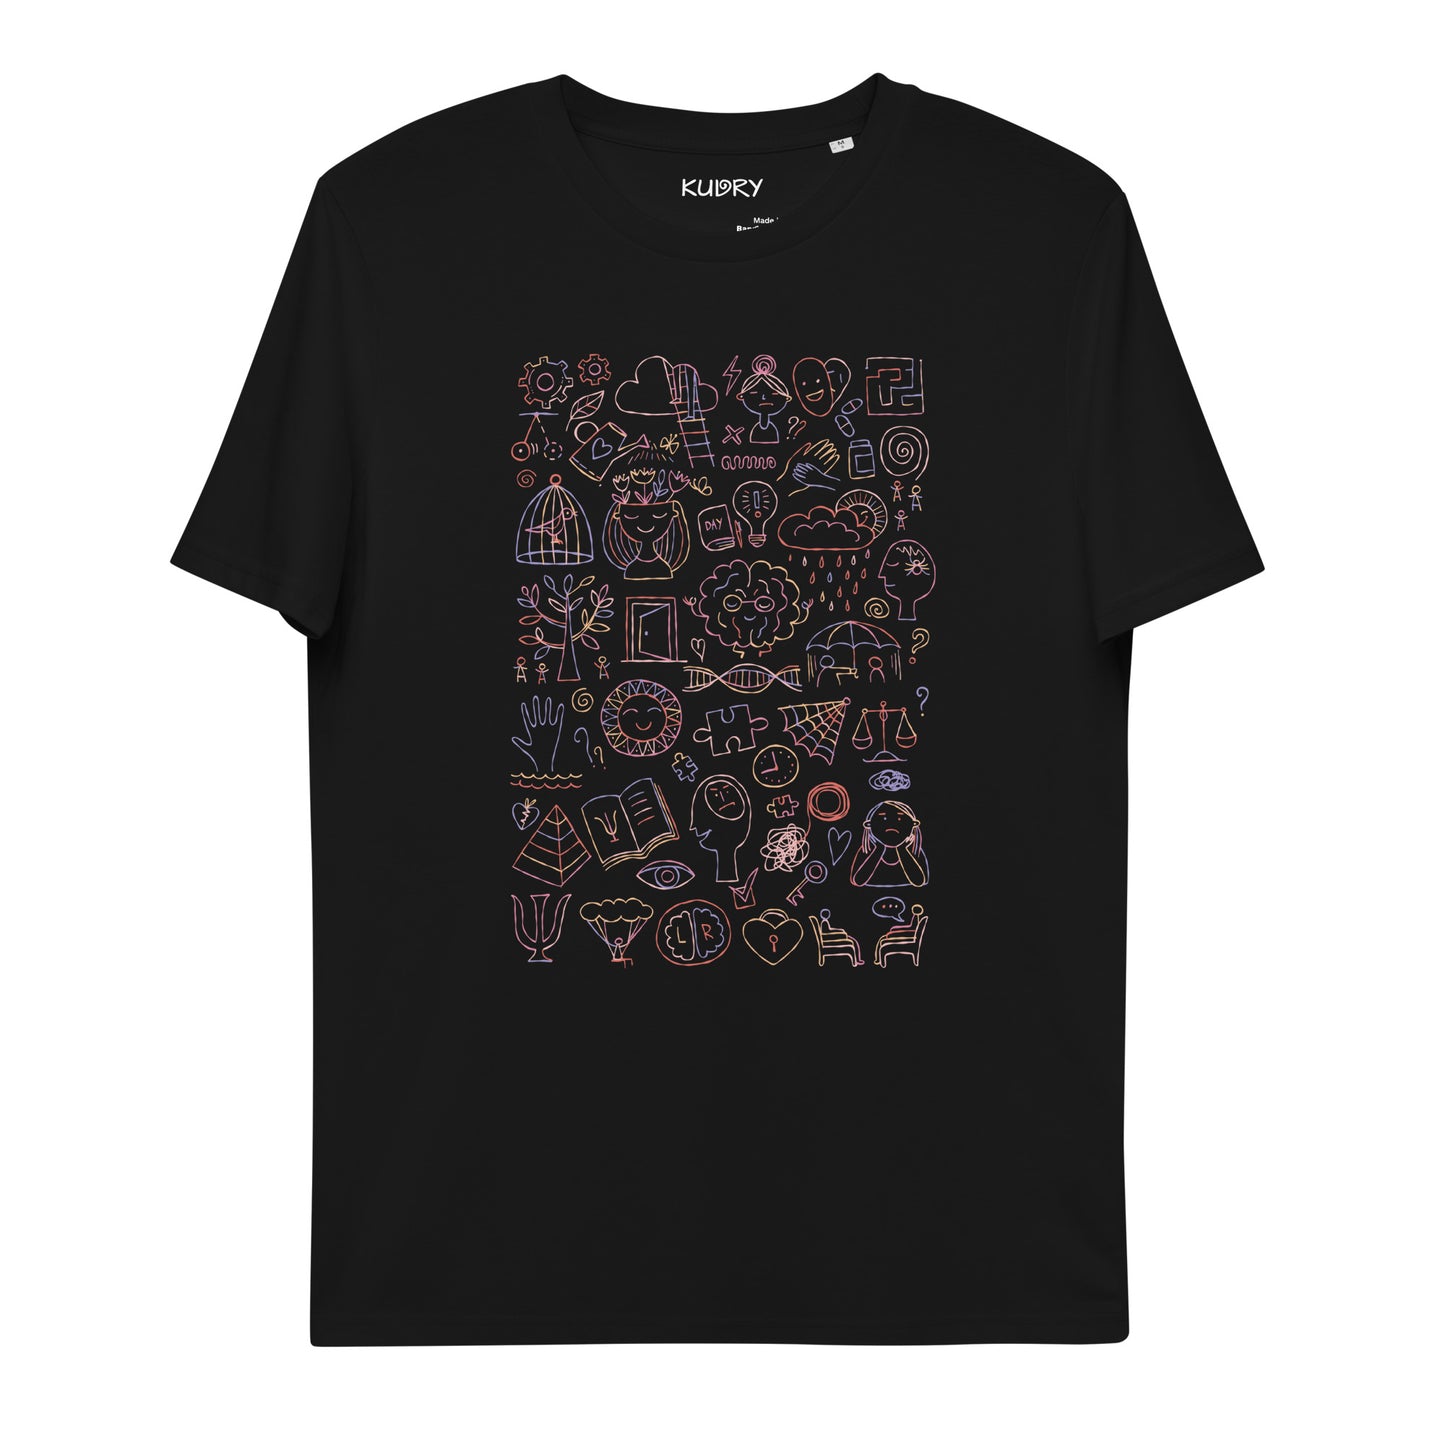 Unisex organic cotton t-shirt black, funny Psychology concept art. Kudry